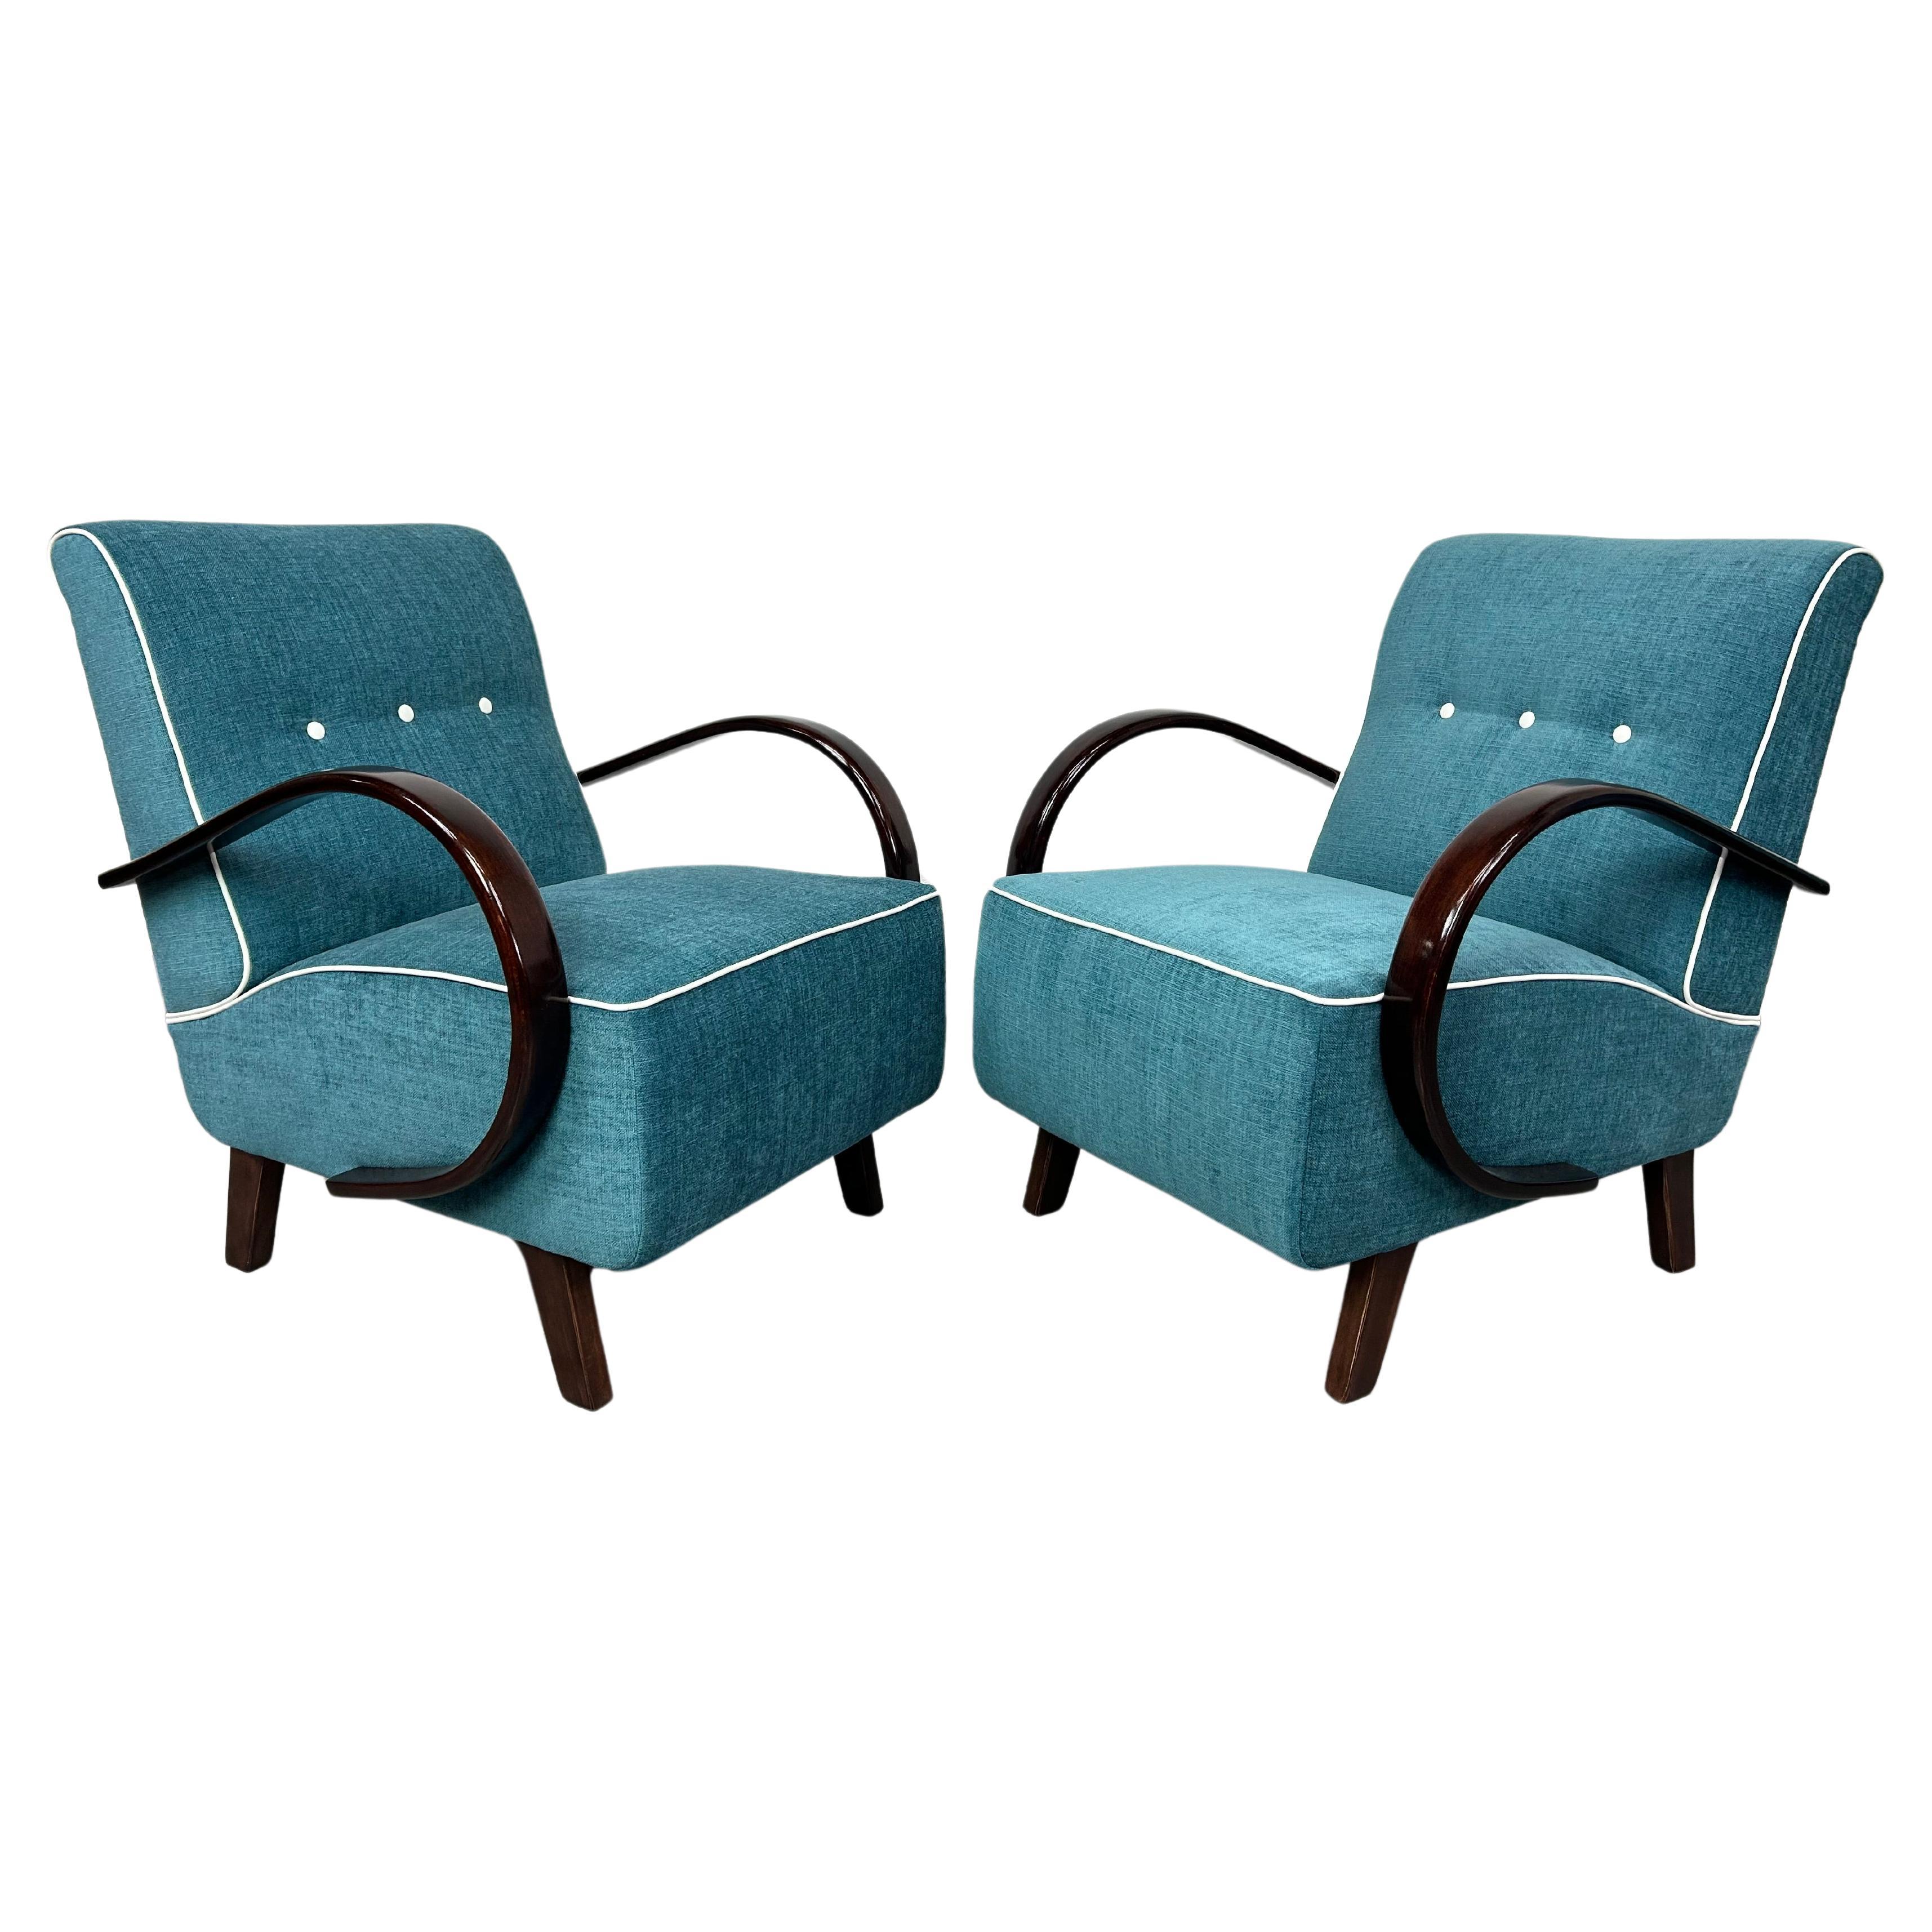 Blue art deco armchairs by Jindřich Halabala